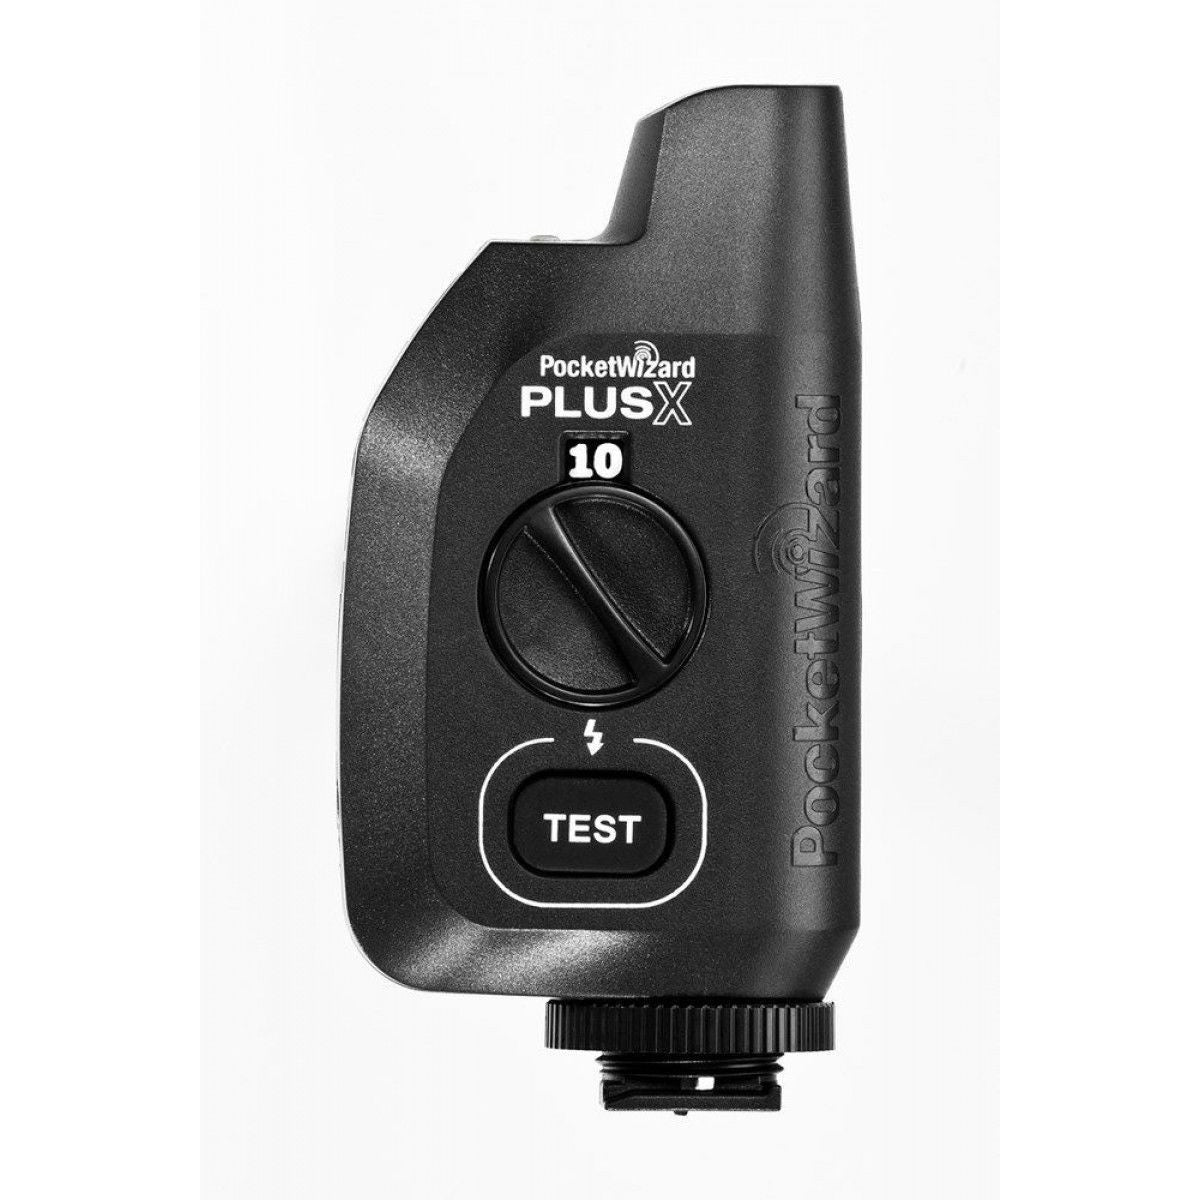 PocketWizard Plus III Transceiver (Black) + PlusX Wireless Radio Trigger